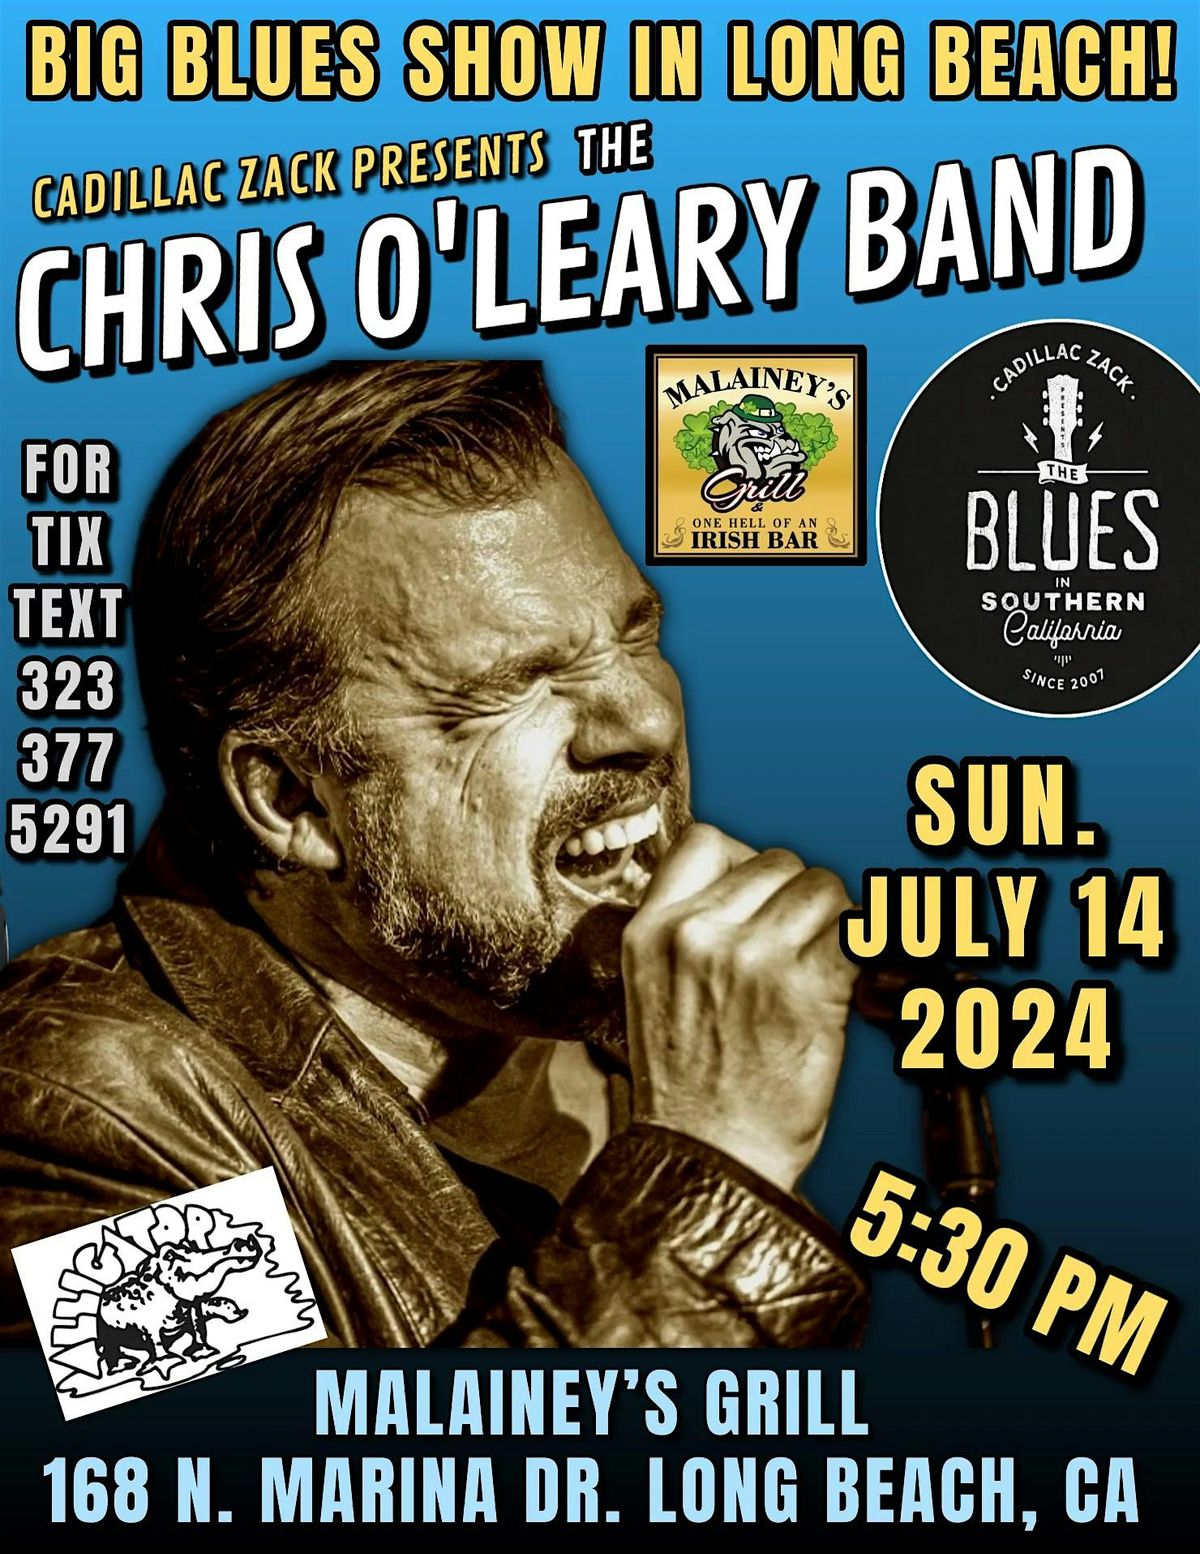 CHRIS O'LEARY BAND - Blues Harmonica Master - in Long Beach!